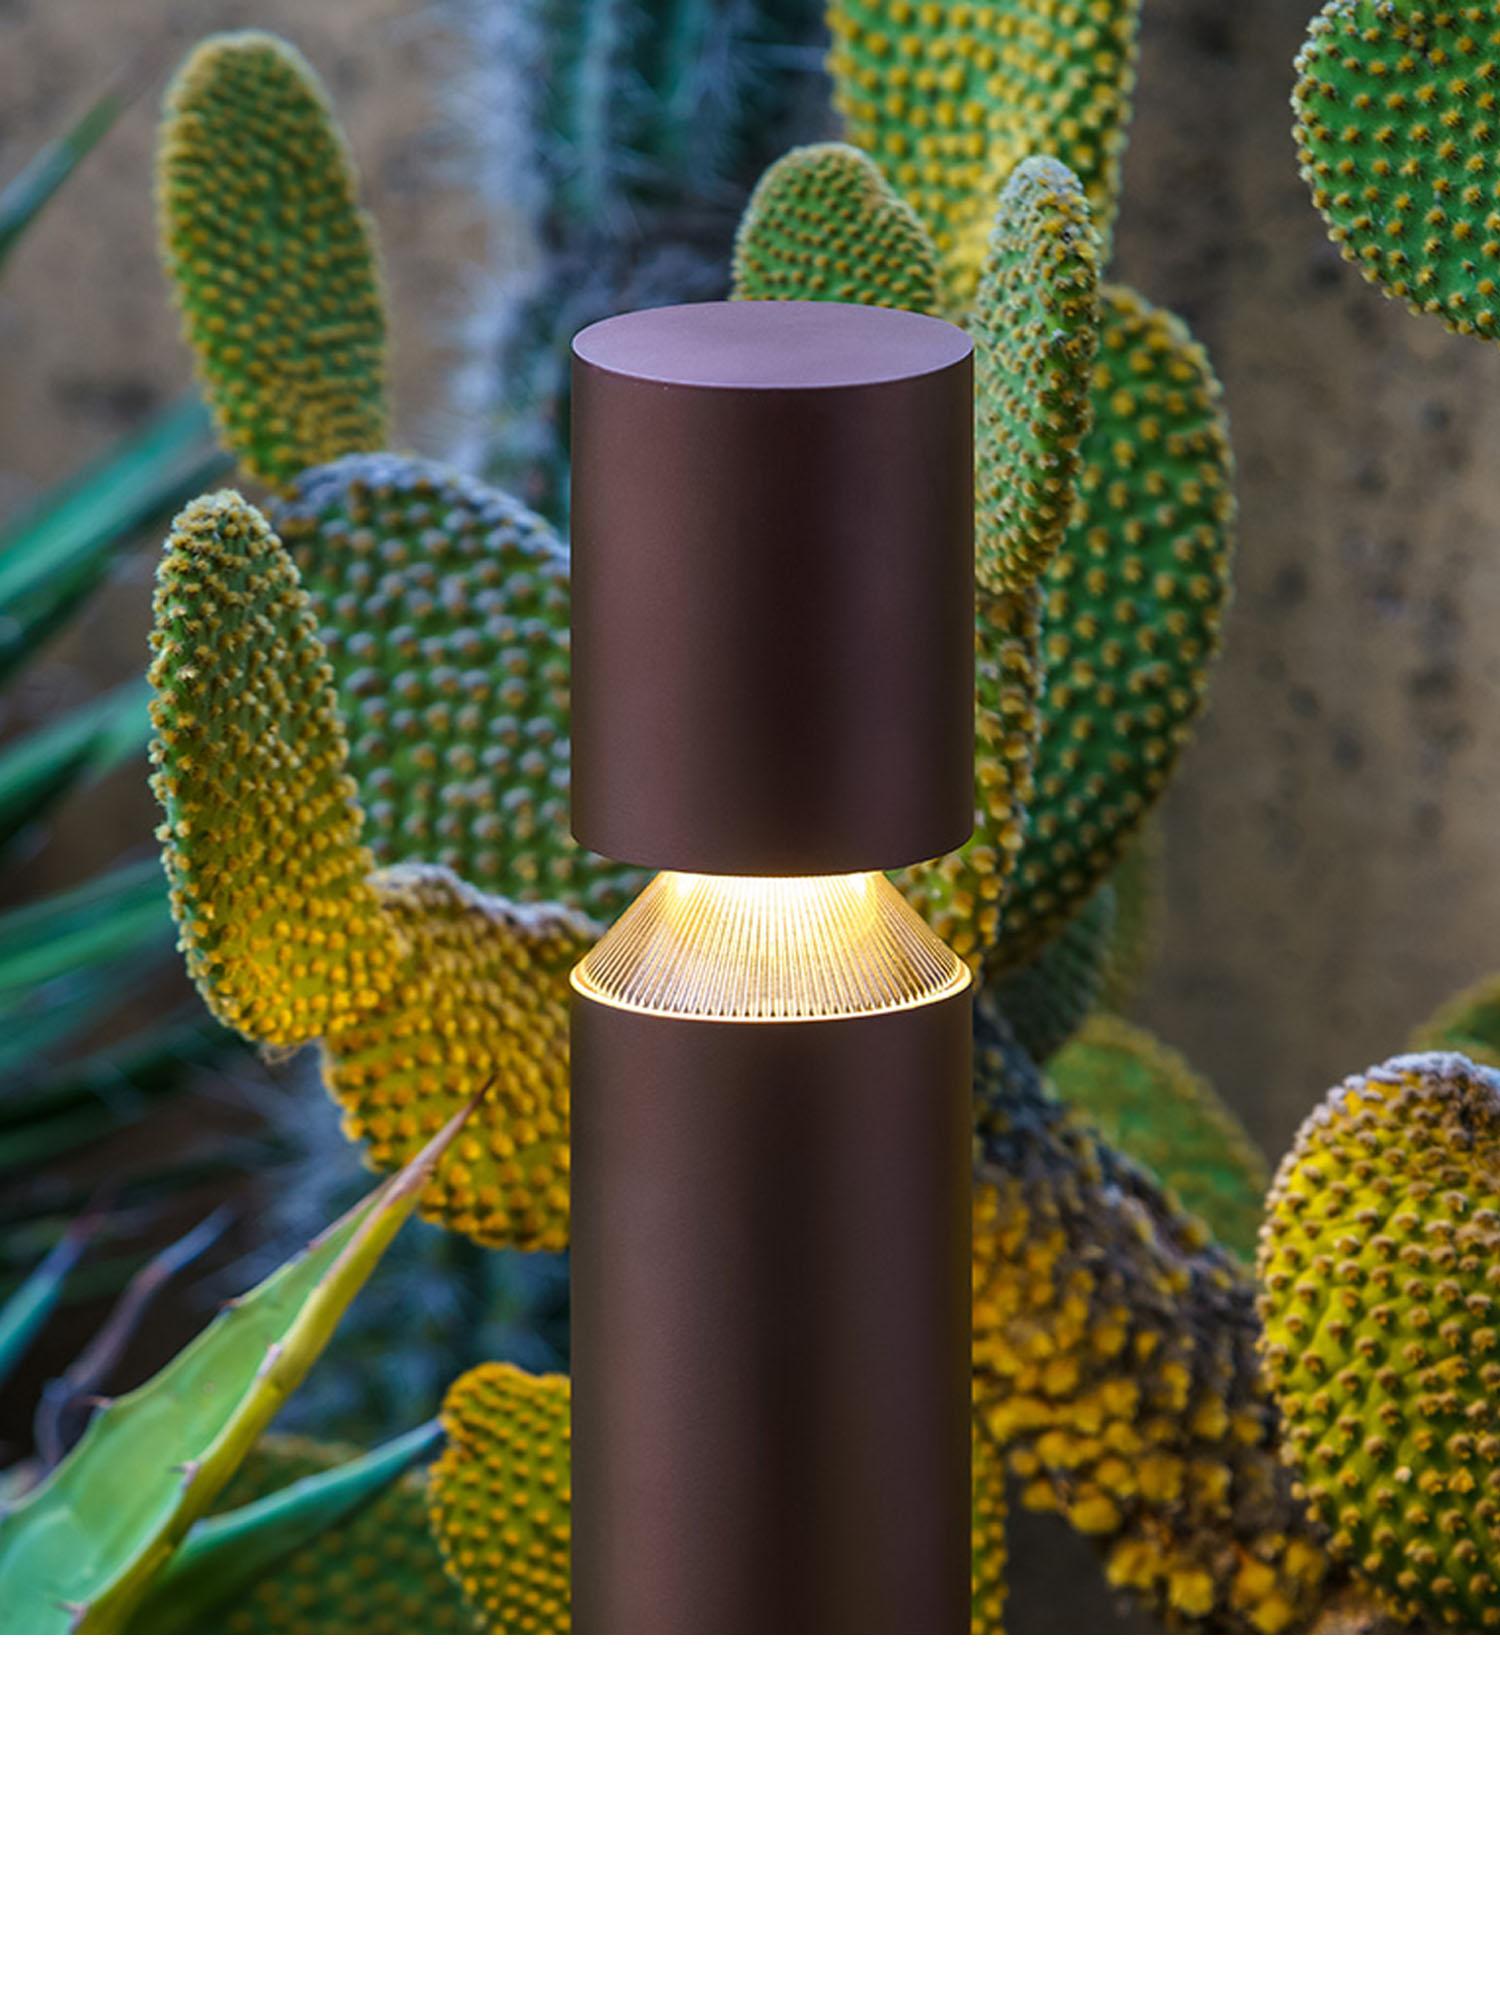 Stainless steel Bollard 
for illuminating outdoor spaces
&nbsp;